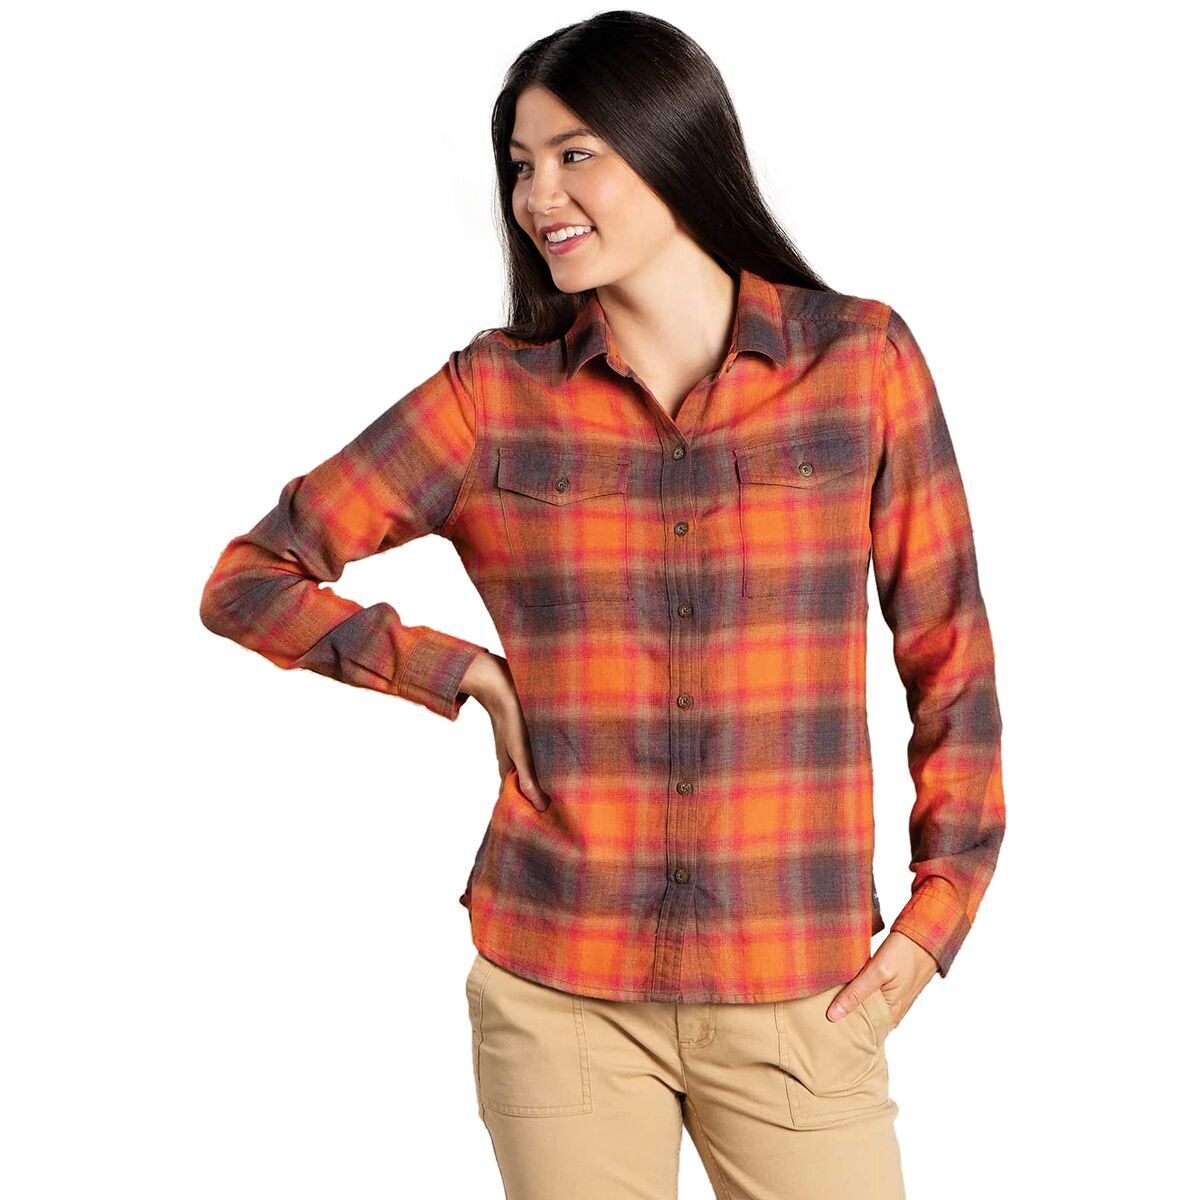 Re-Form Flannel Shirt - Women